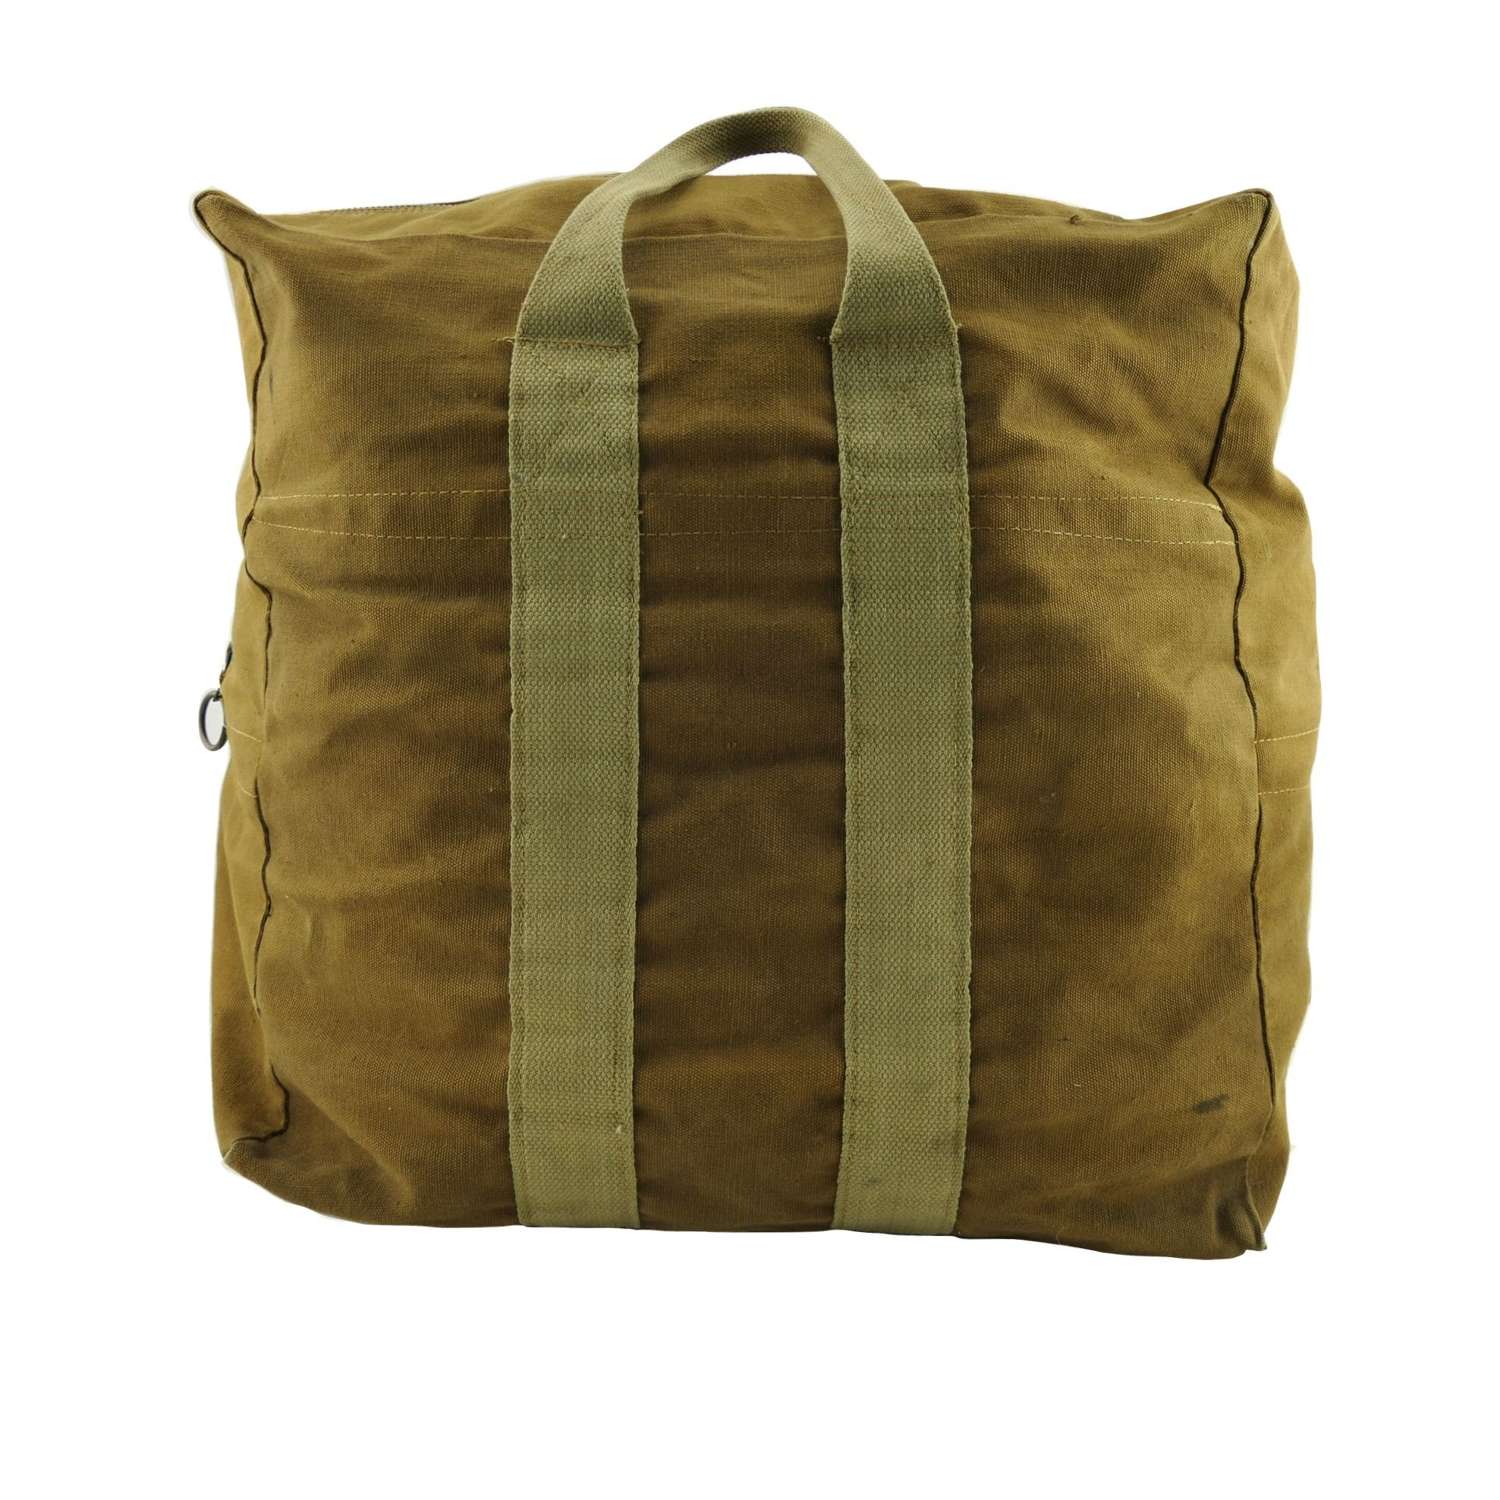 RAF parachute bag